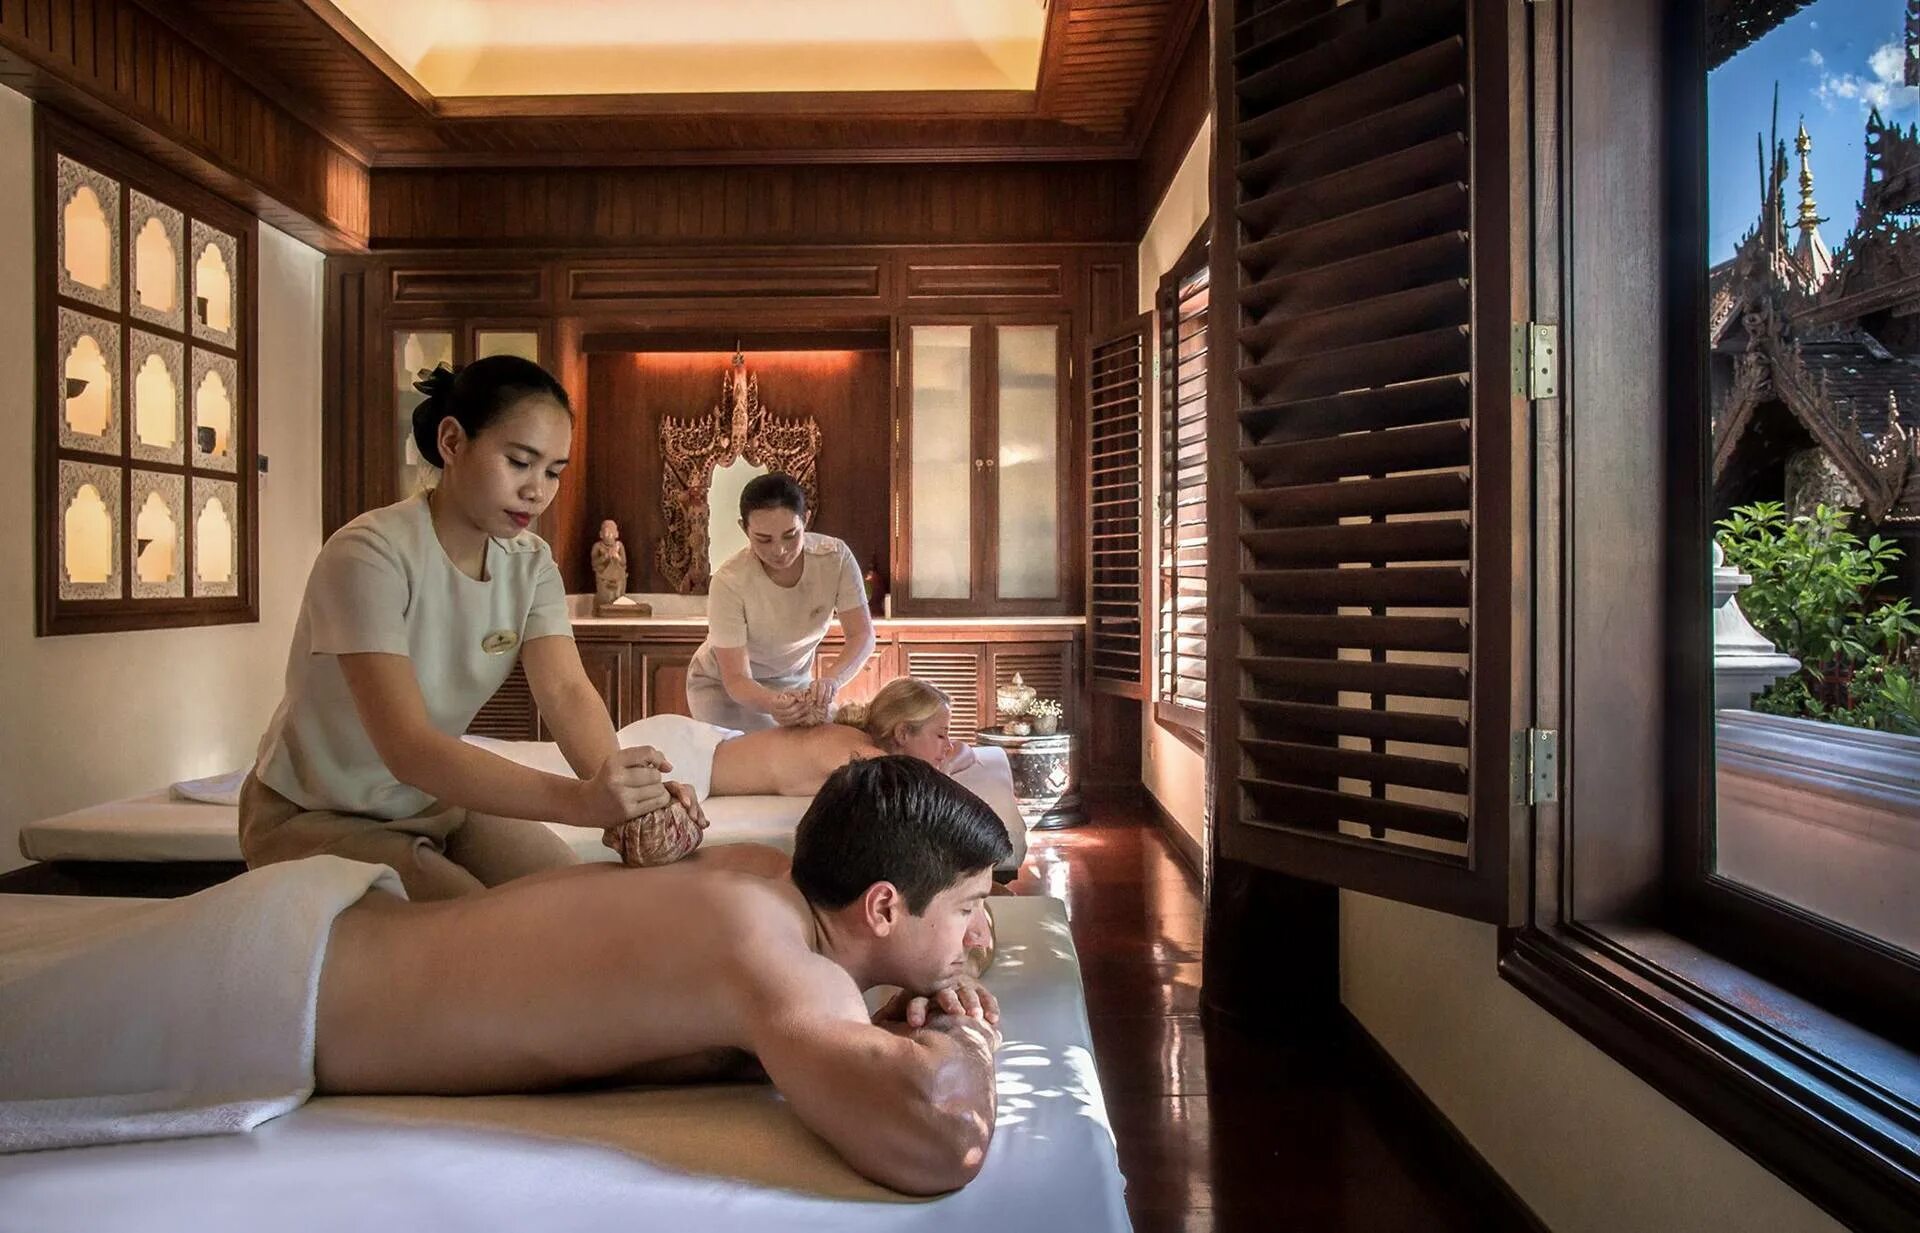 Балийский массаж. Традиционный Балийский массаж. Поход в спа. Тайский массаж для мужчин.